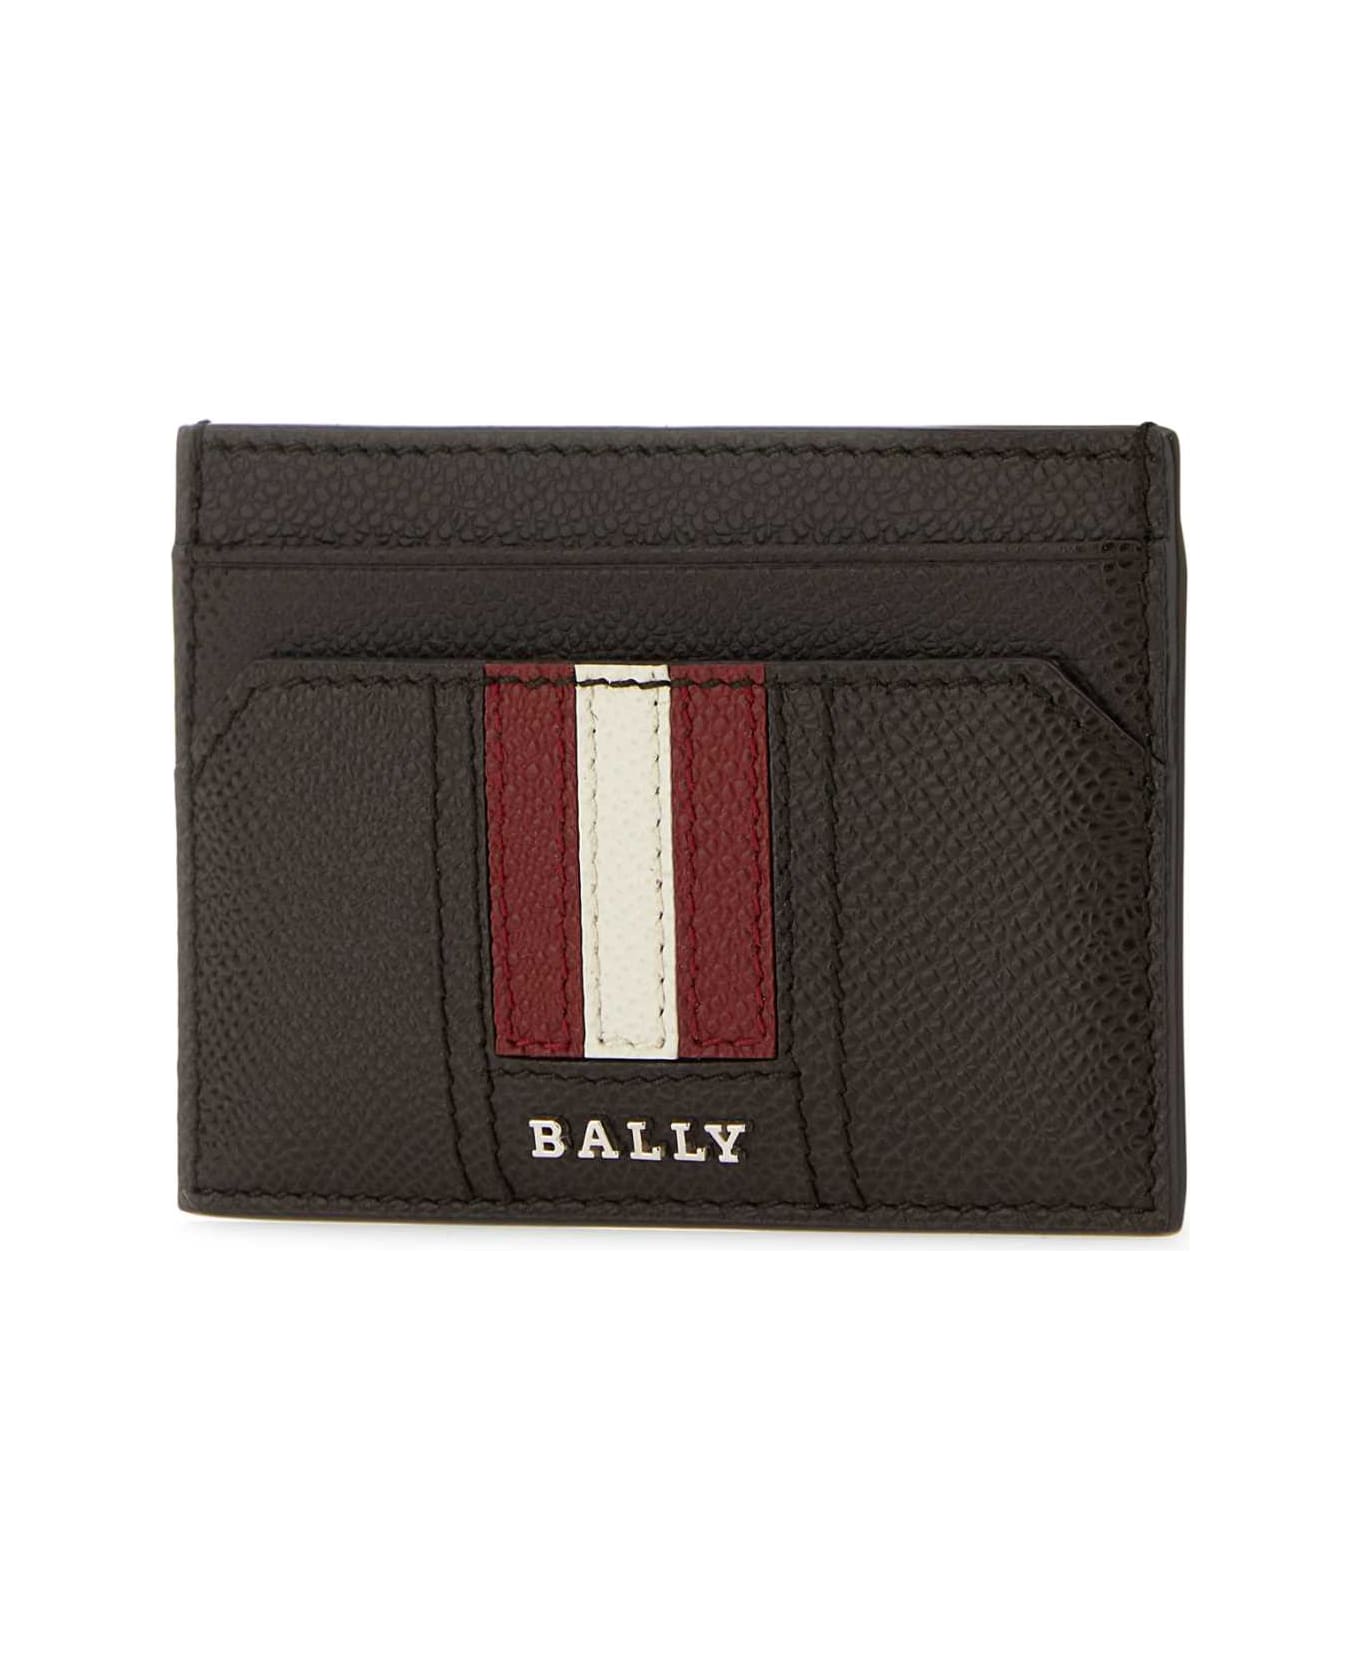 Bally Chocolate Leather Thar Card Holder - F021